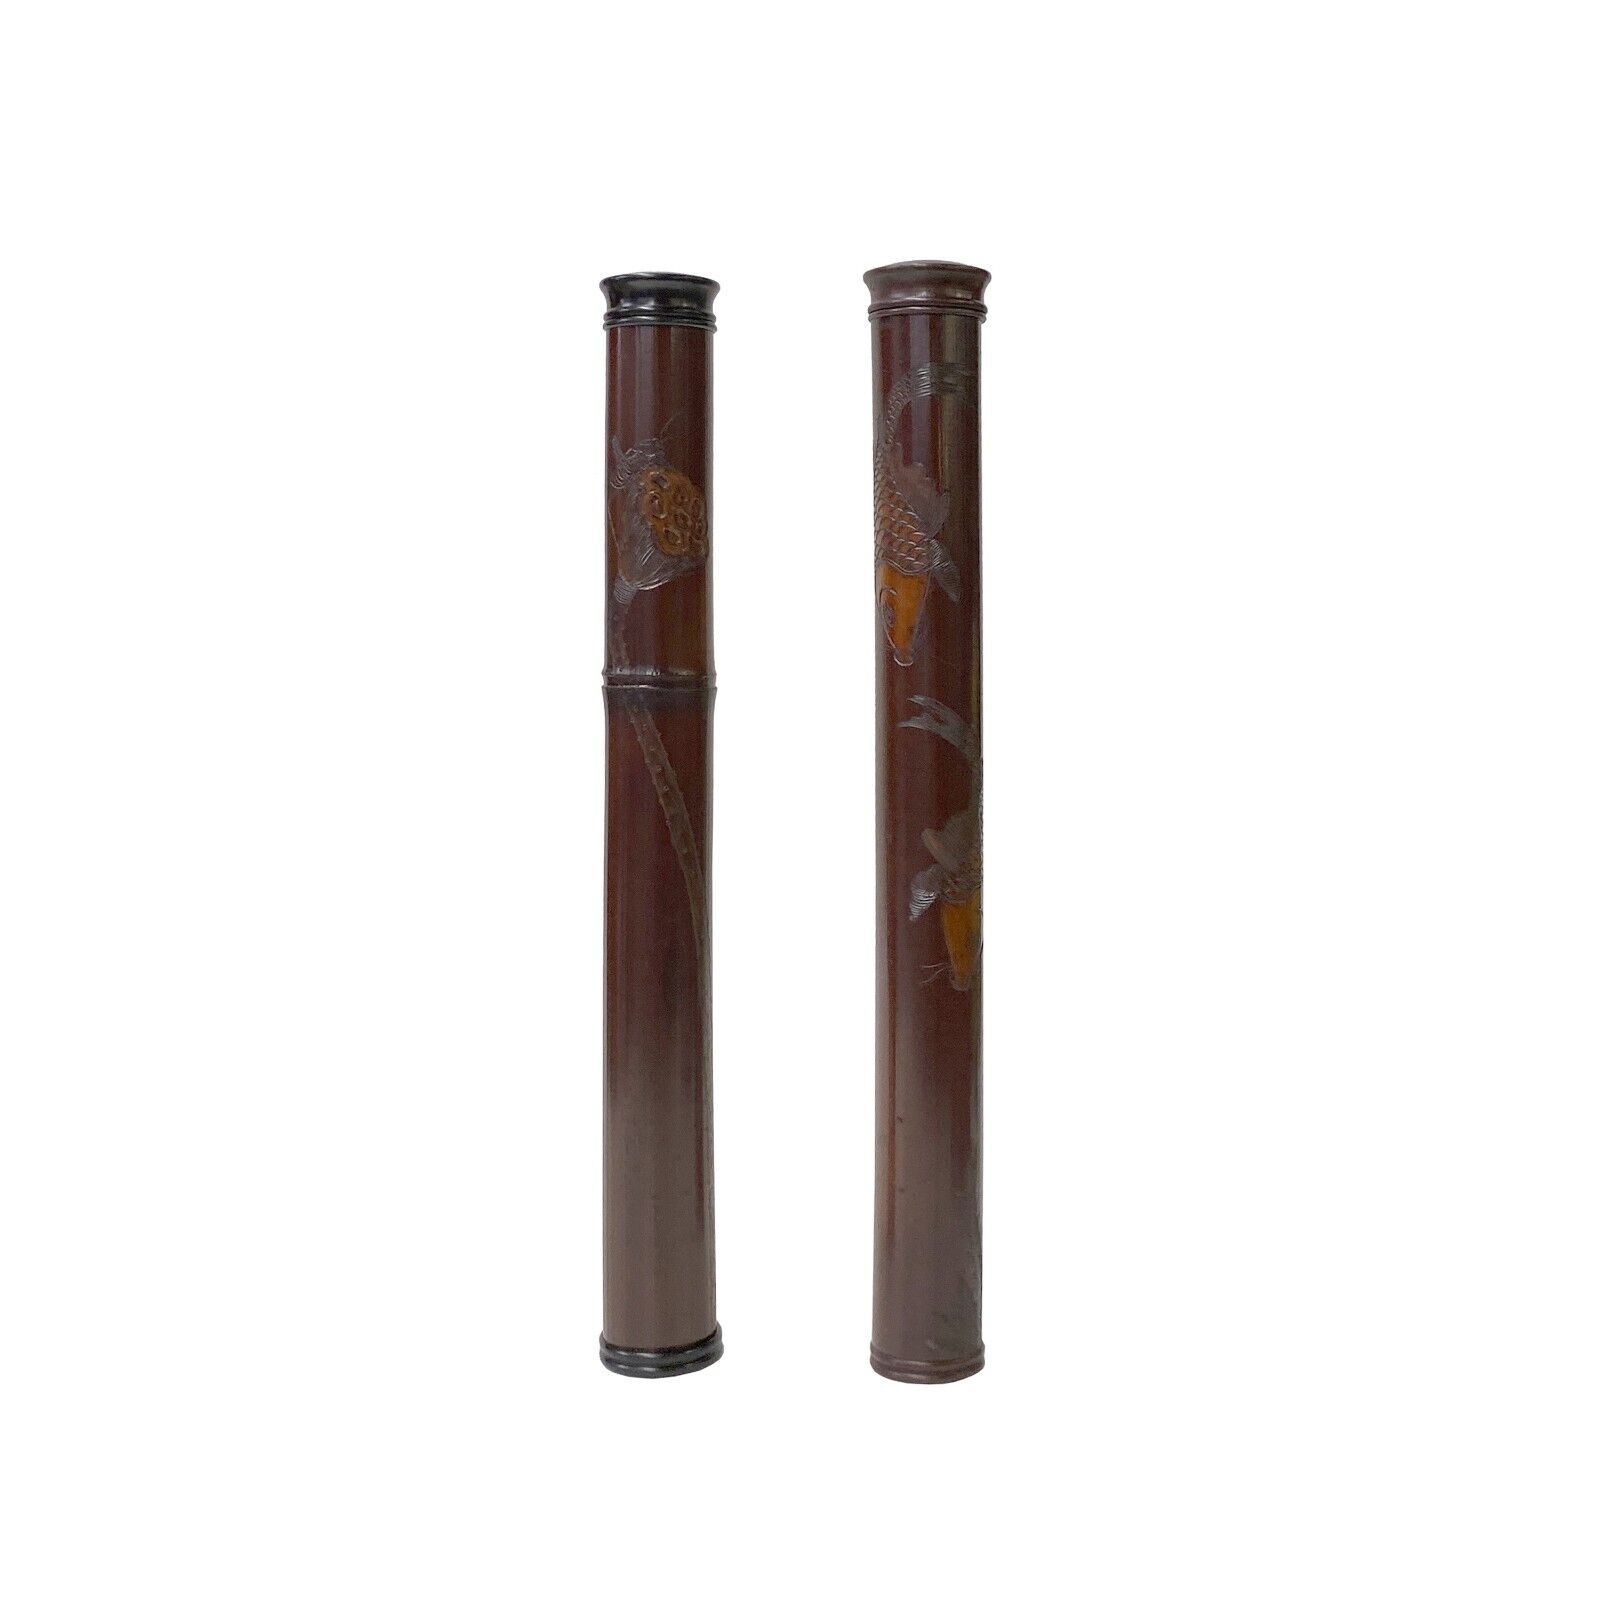 2 x Chinese Bamboo / Wood Carving Tube Incense Holder Display Art ws3179